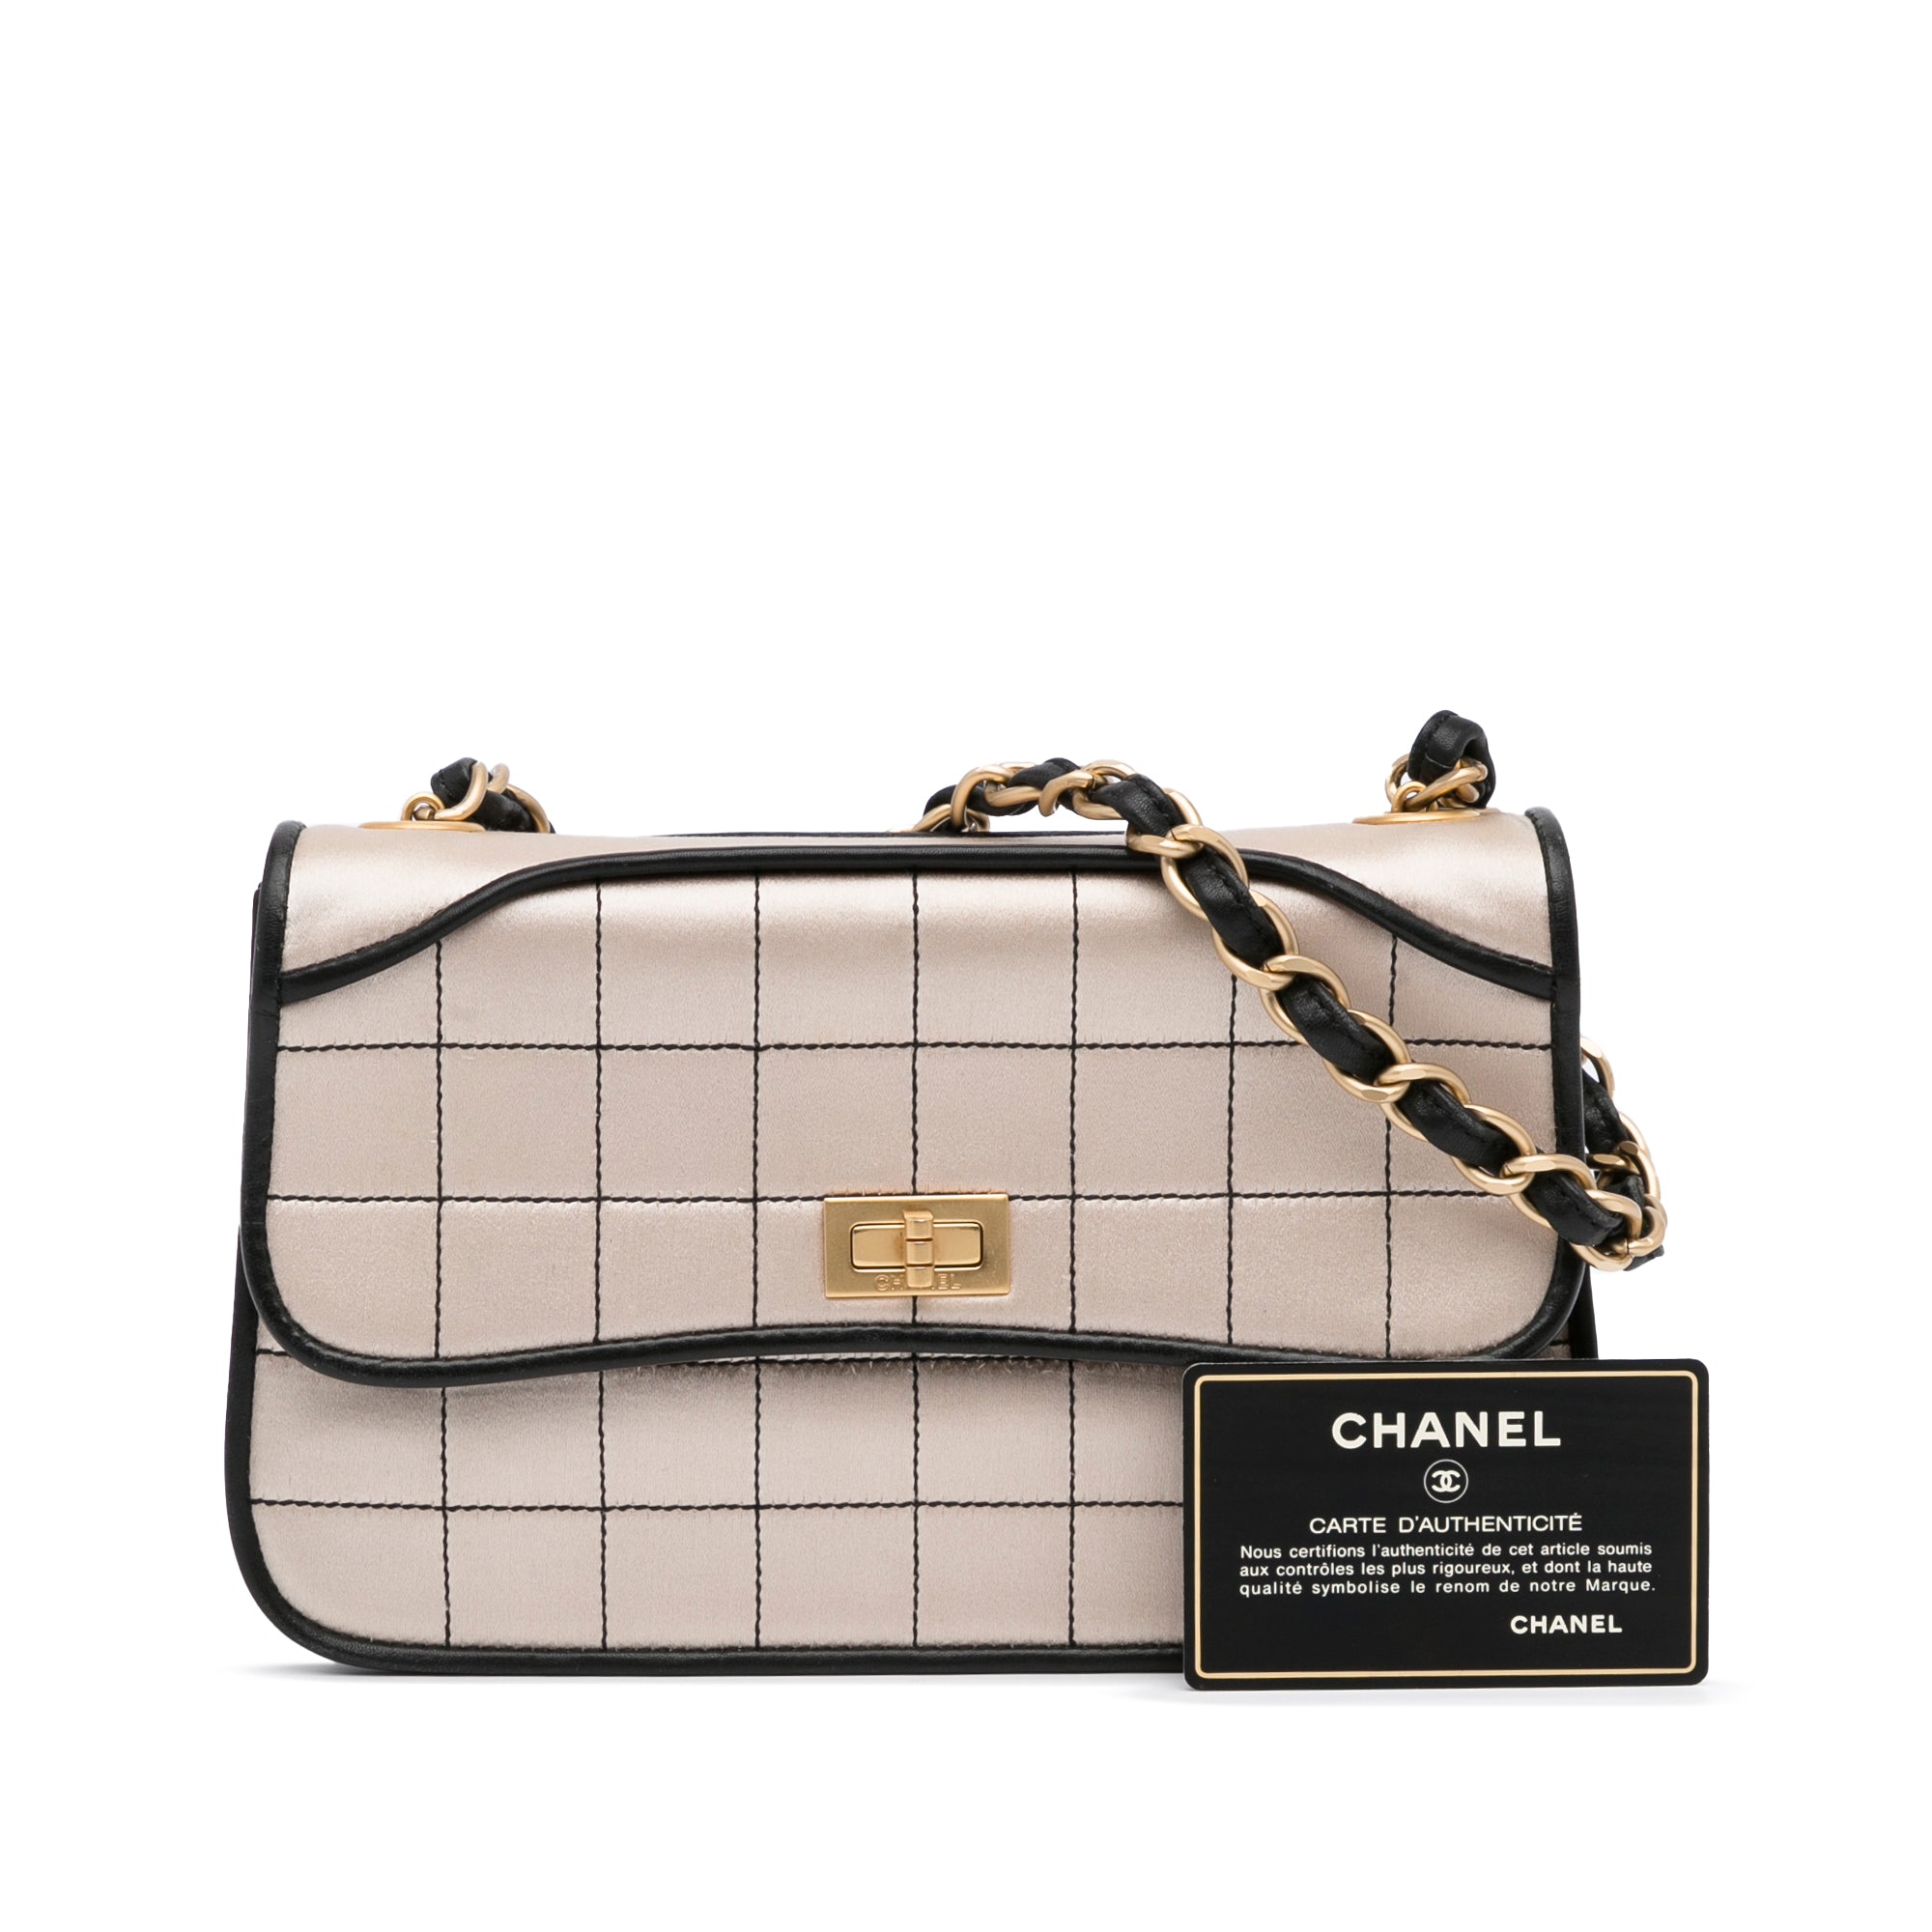 Chanel - Mademoiselle Small Flap Bag Calfskin Noir